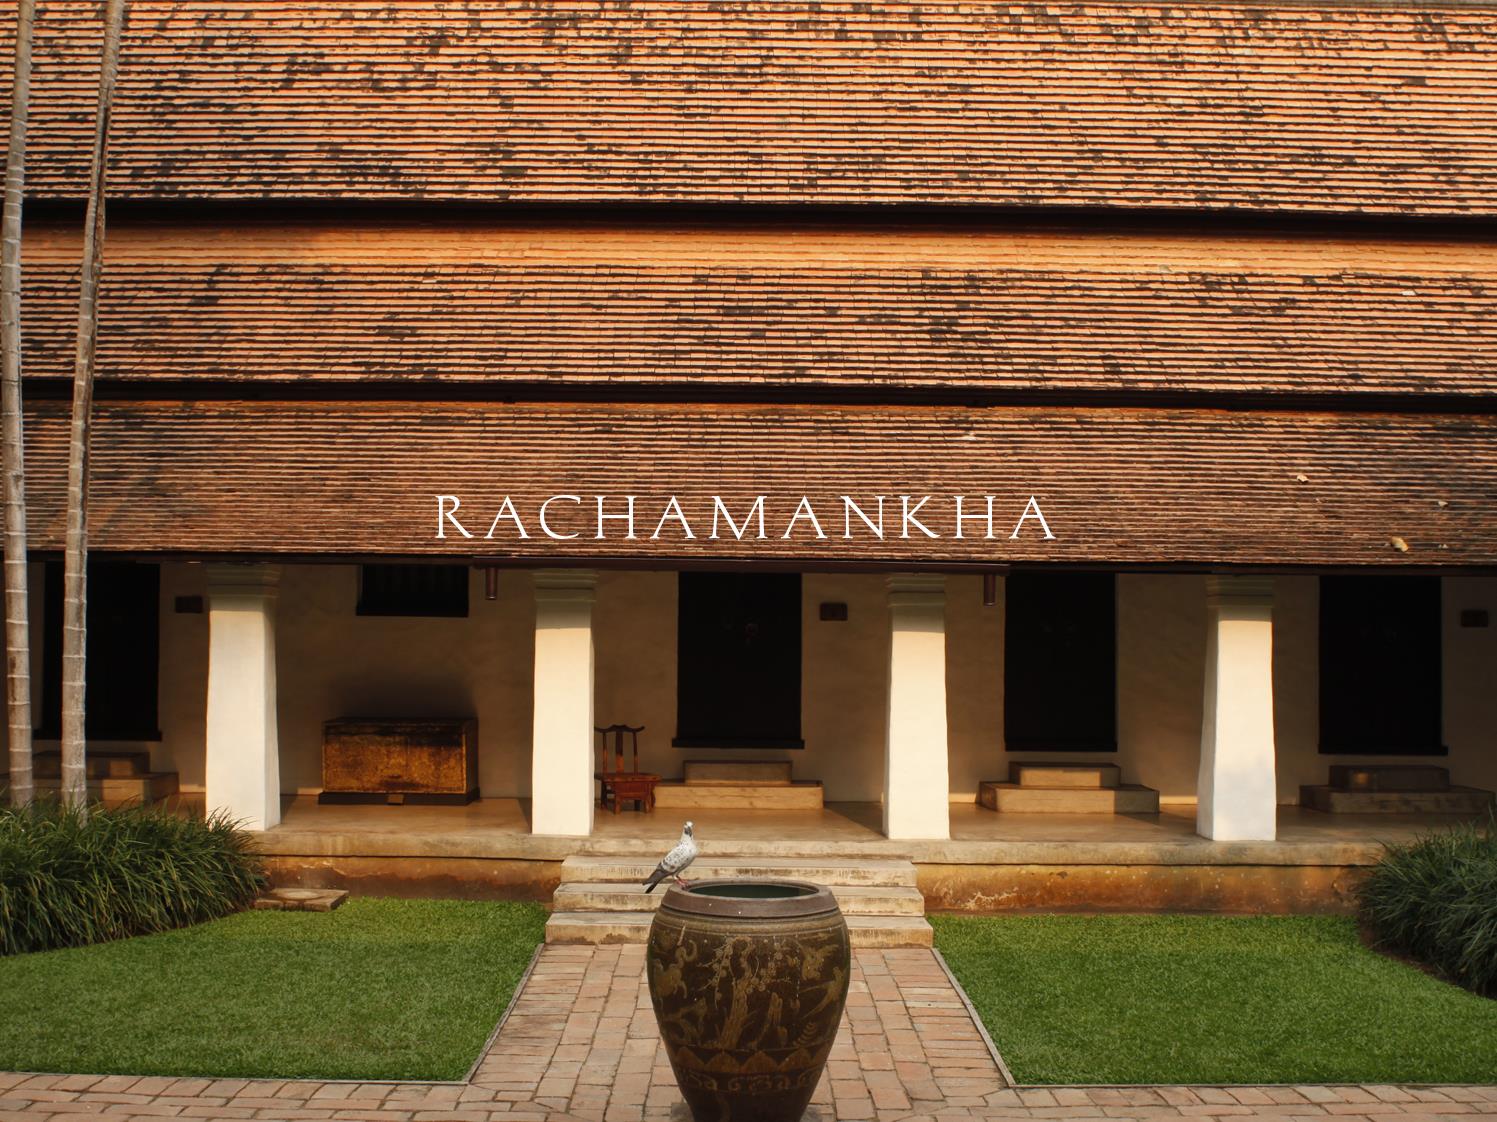 Rachamankha Hotel a Member of Relais & Châteaux - Image 5